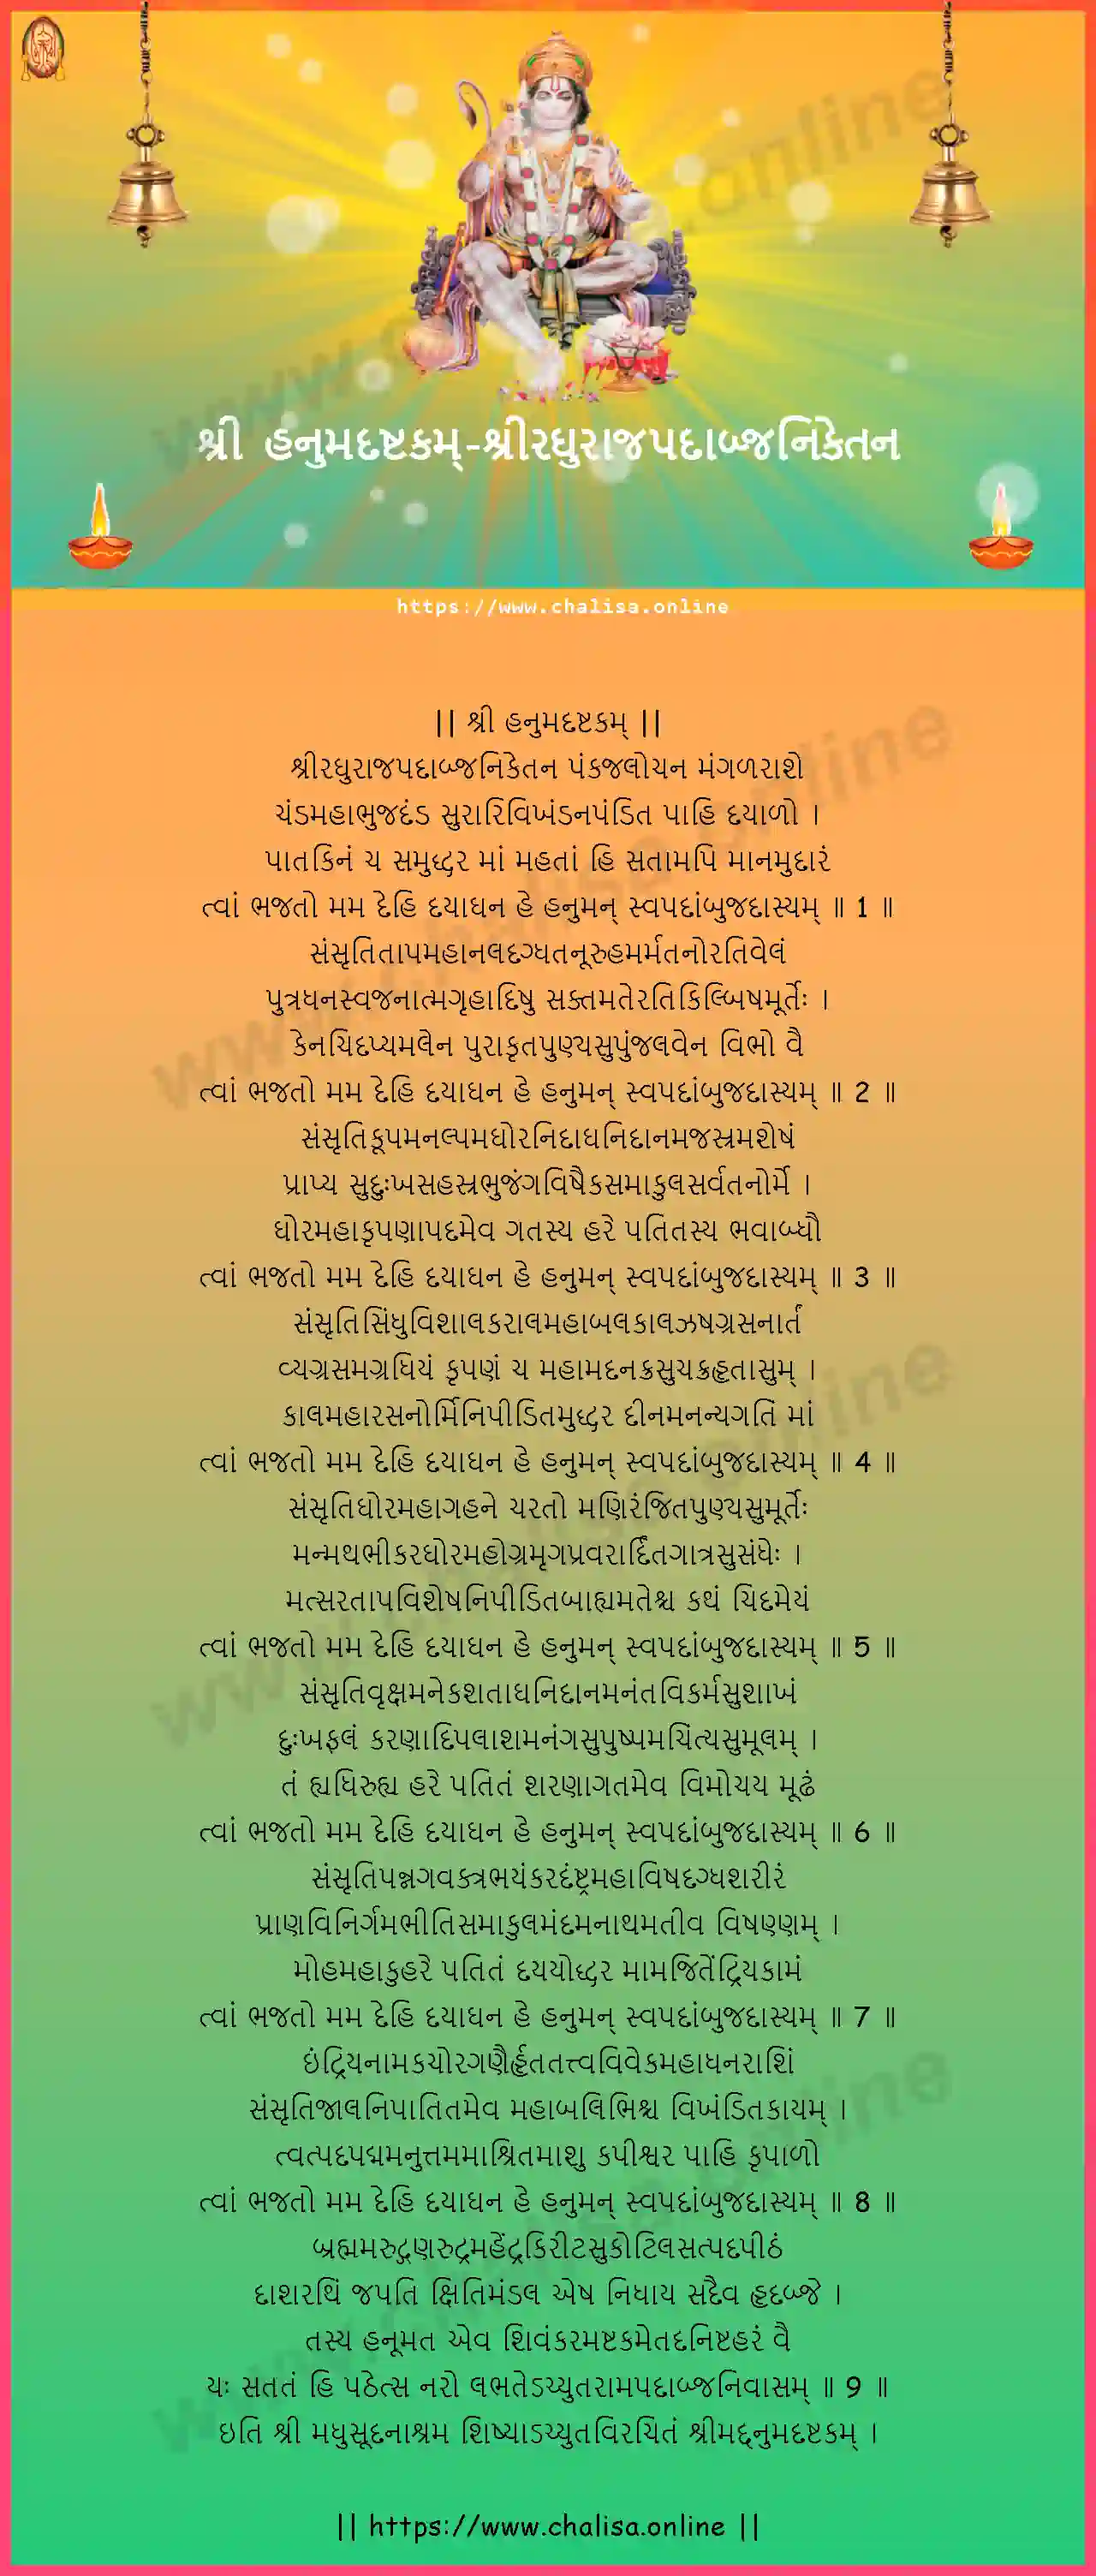 sriraghurajapadabjaniketana-hanuman-ashtakam-gujarati-gujarati-lyrics-download